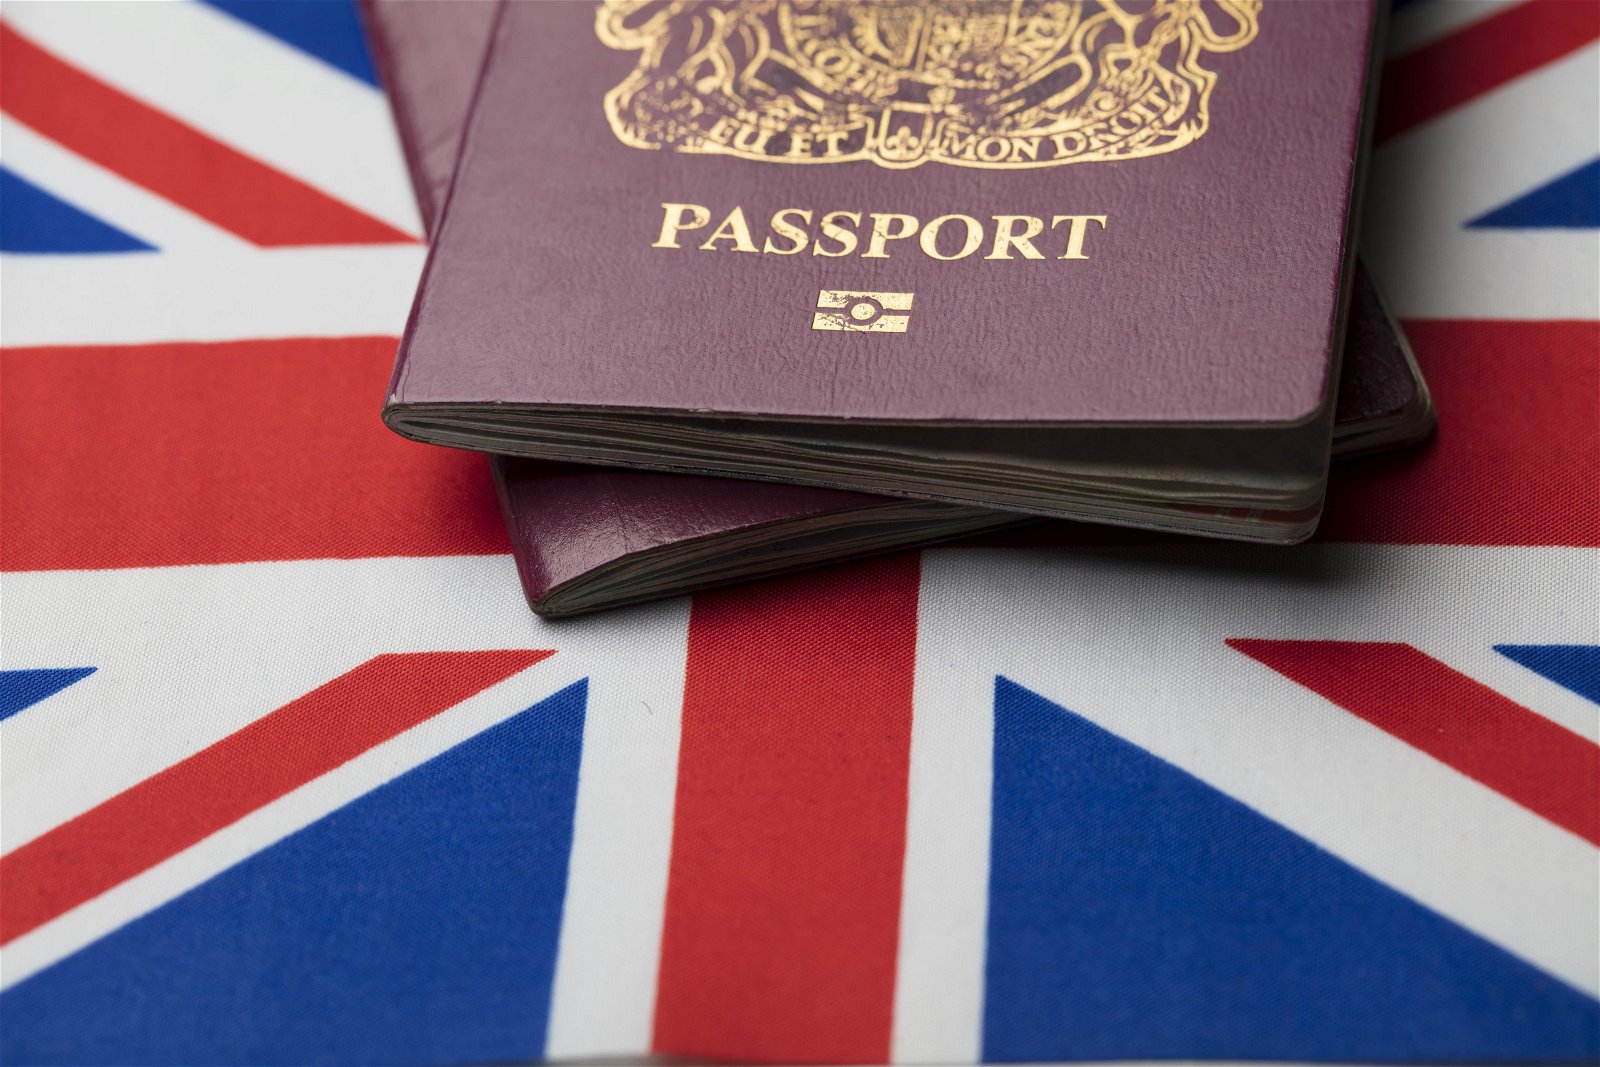 United Kingdom passport with Union Jack Great Britain flag